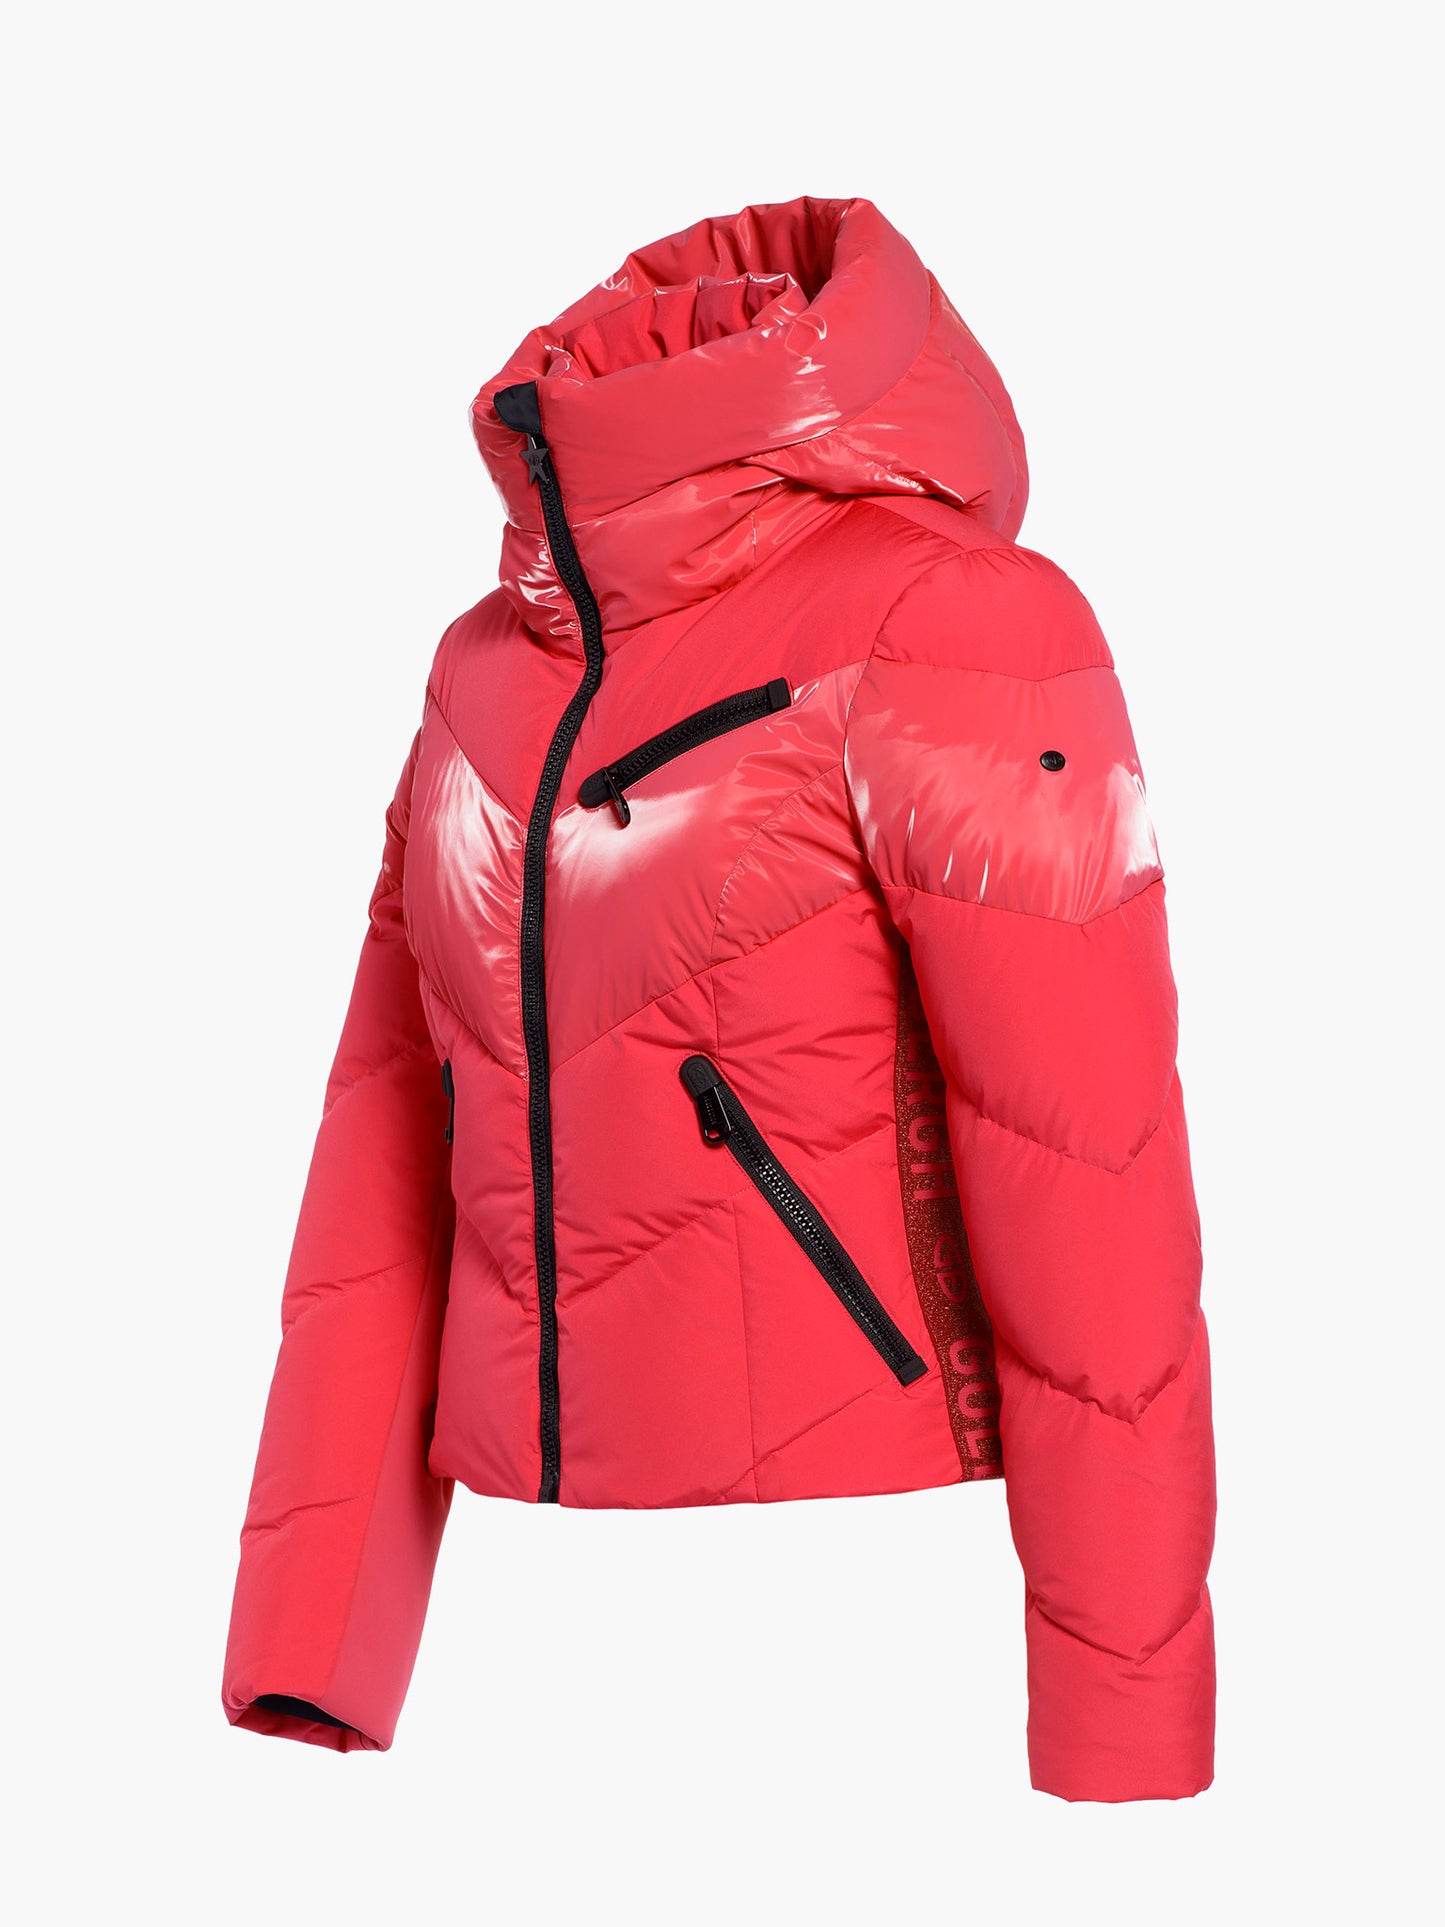 MORAINE ski jacket